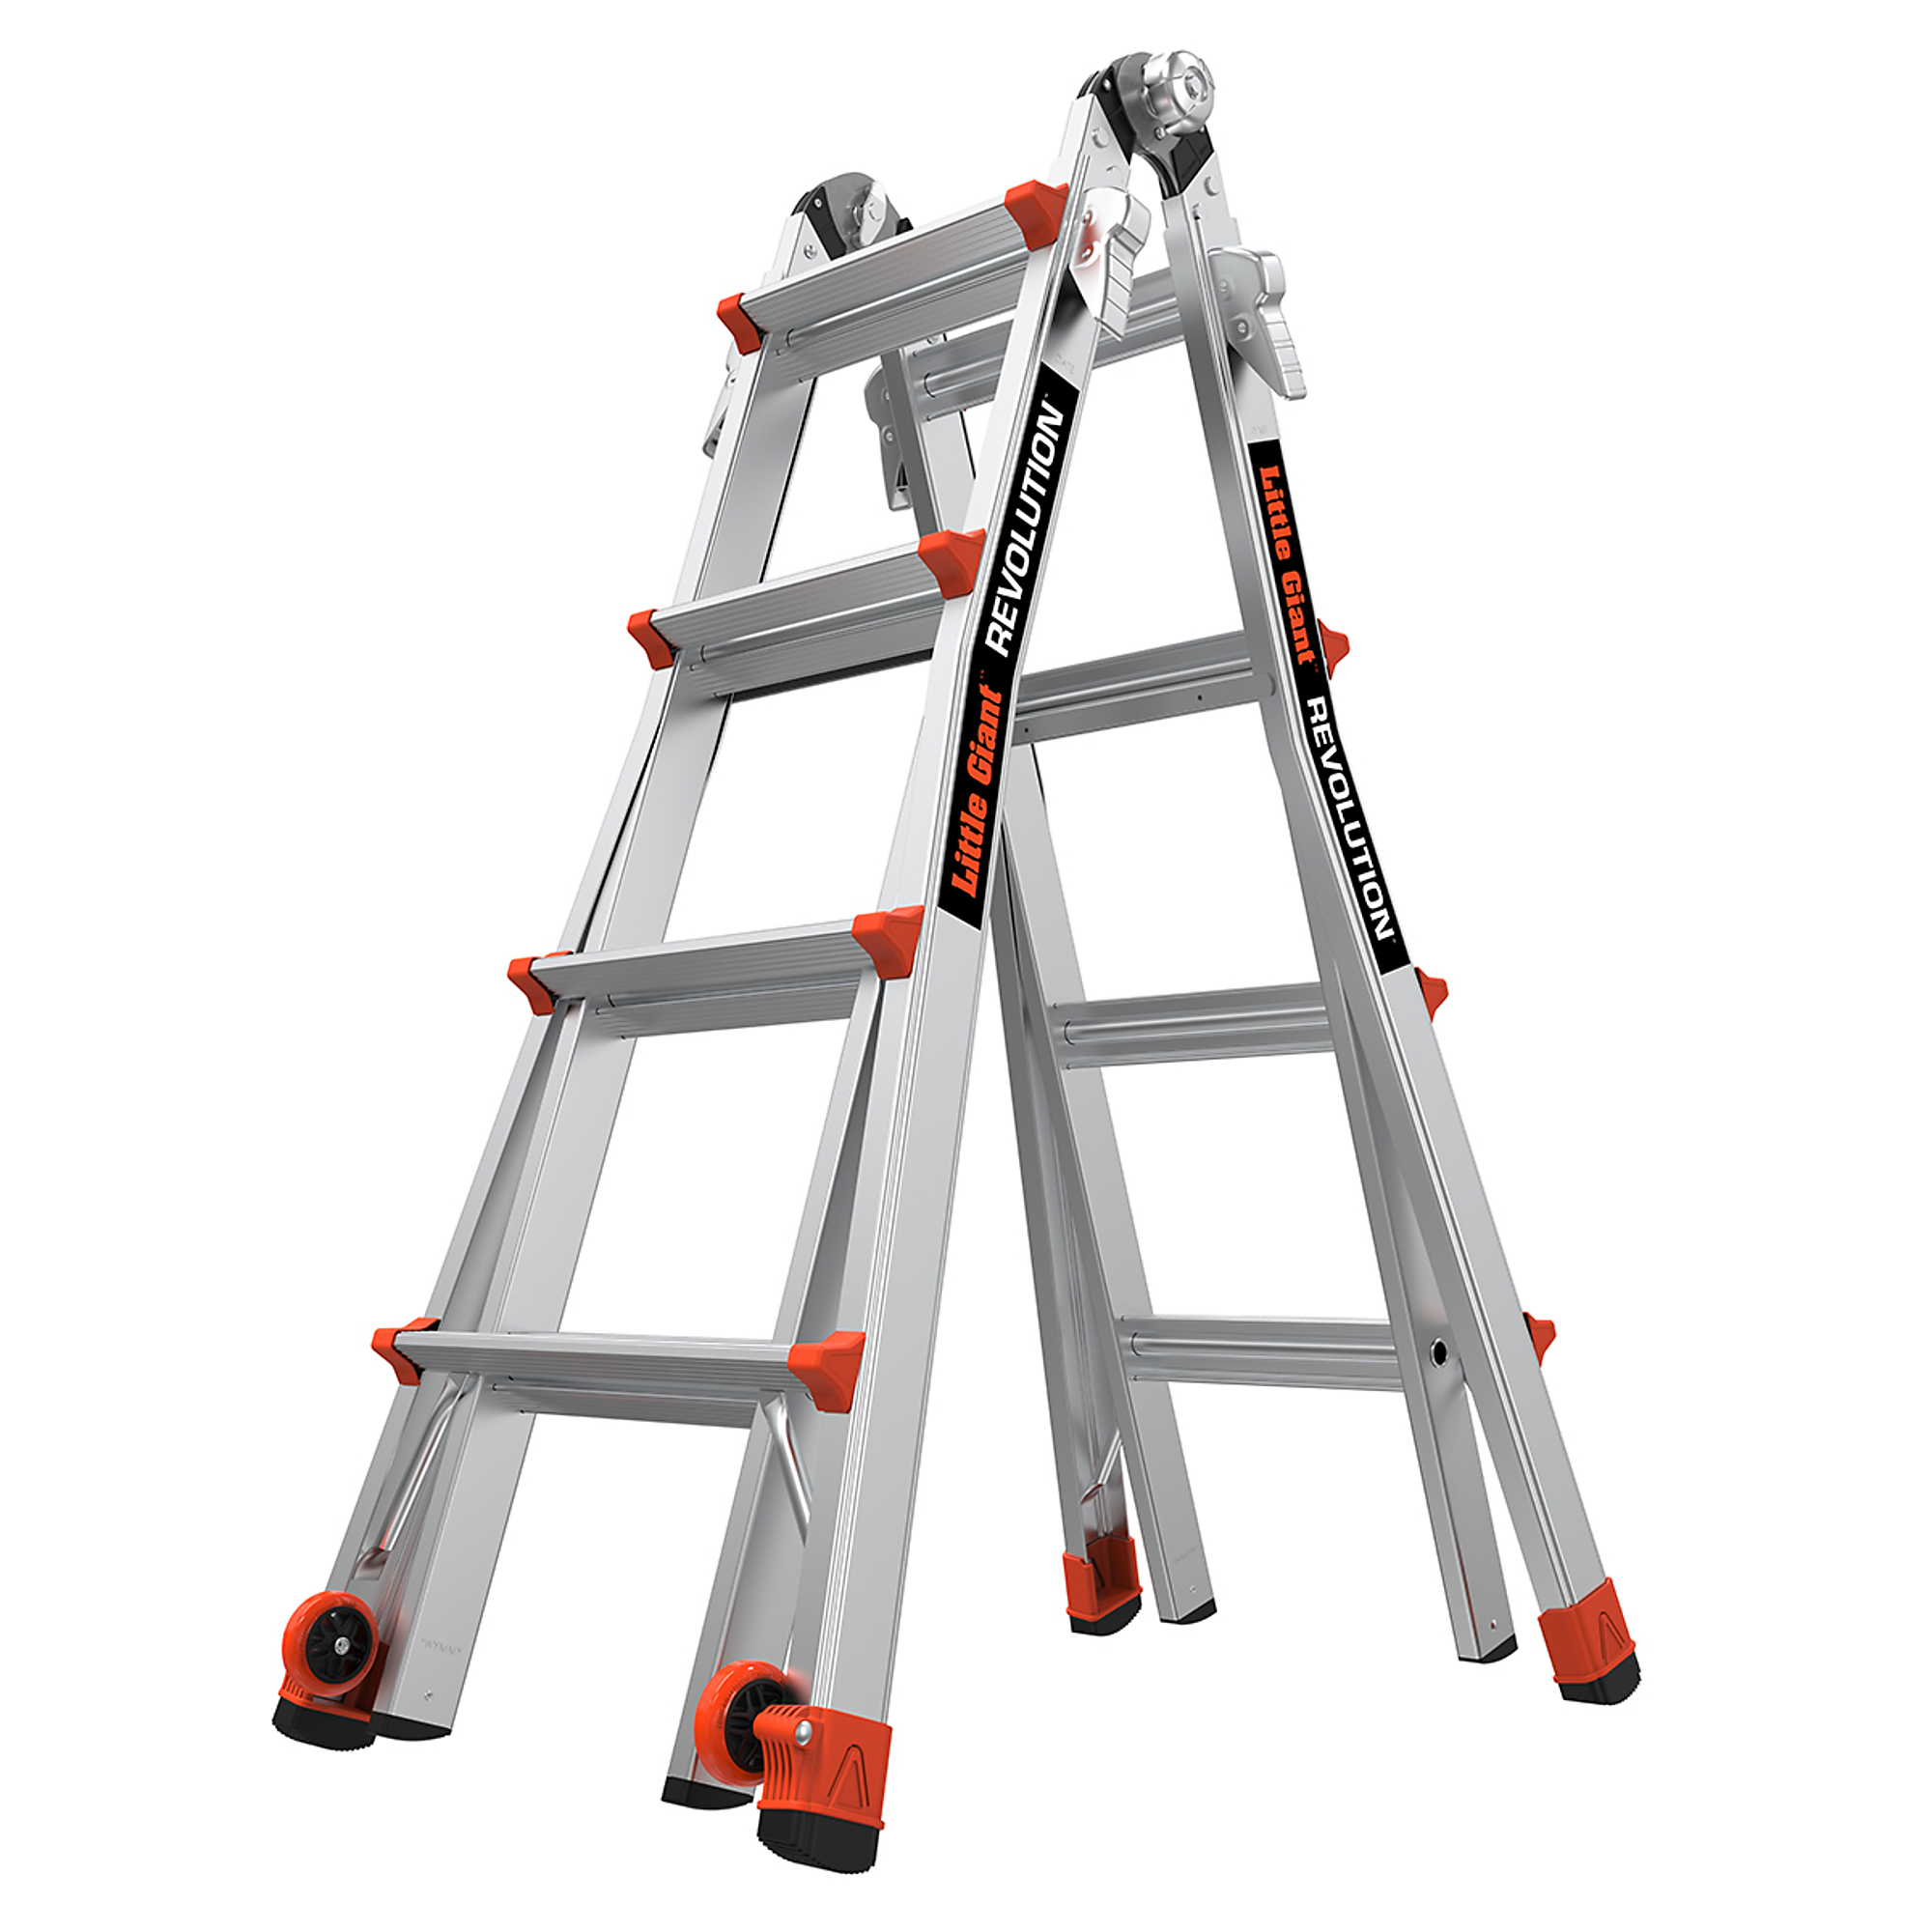 REVOLUTION 17 300lb Alum Articulated Extend Ladder, Height 17 ft, Capacity 300 lb, Material Aluminum, Model - Little Giant Ladder 13117-001